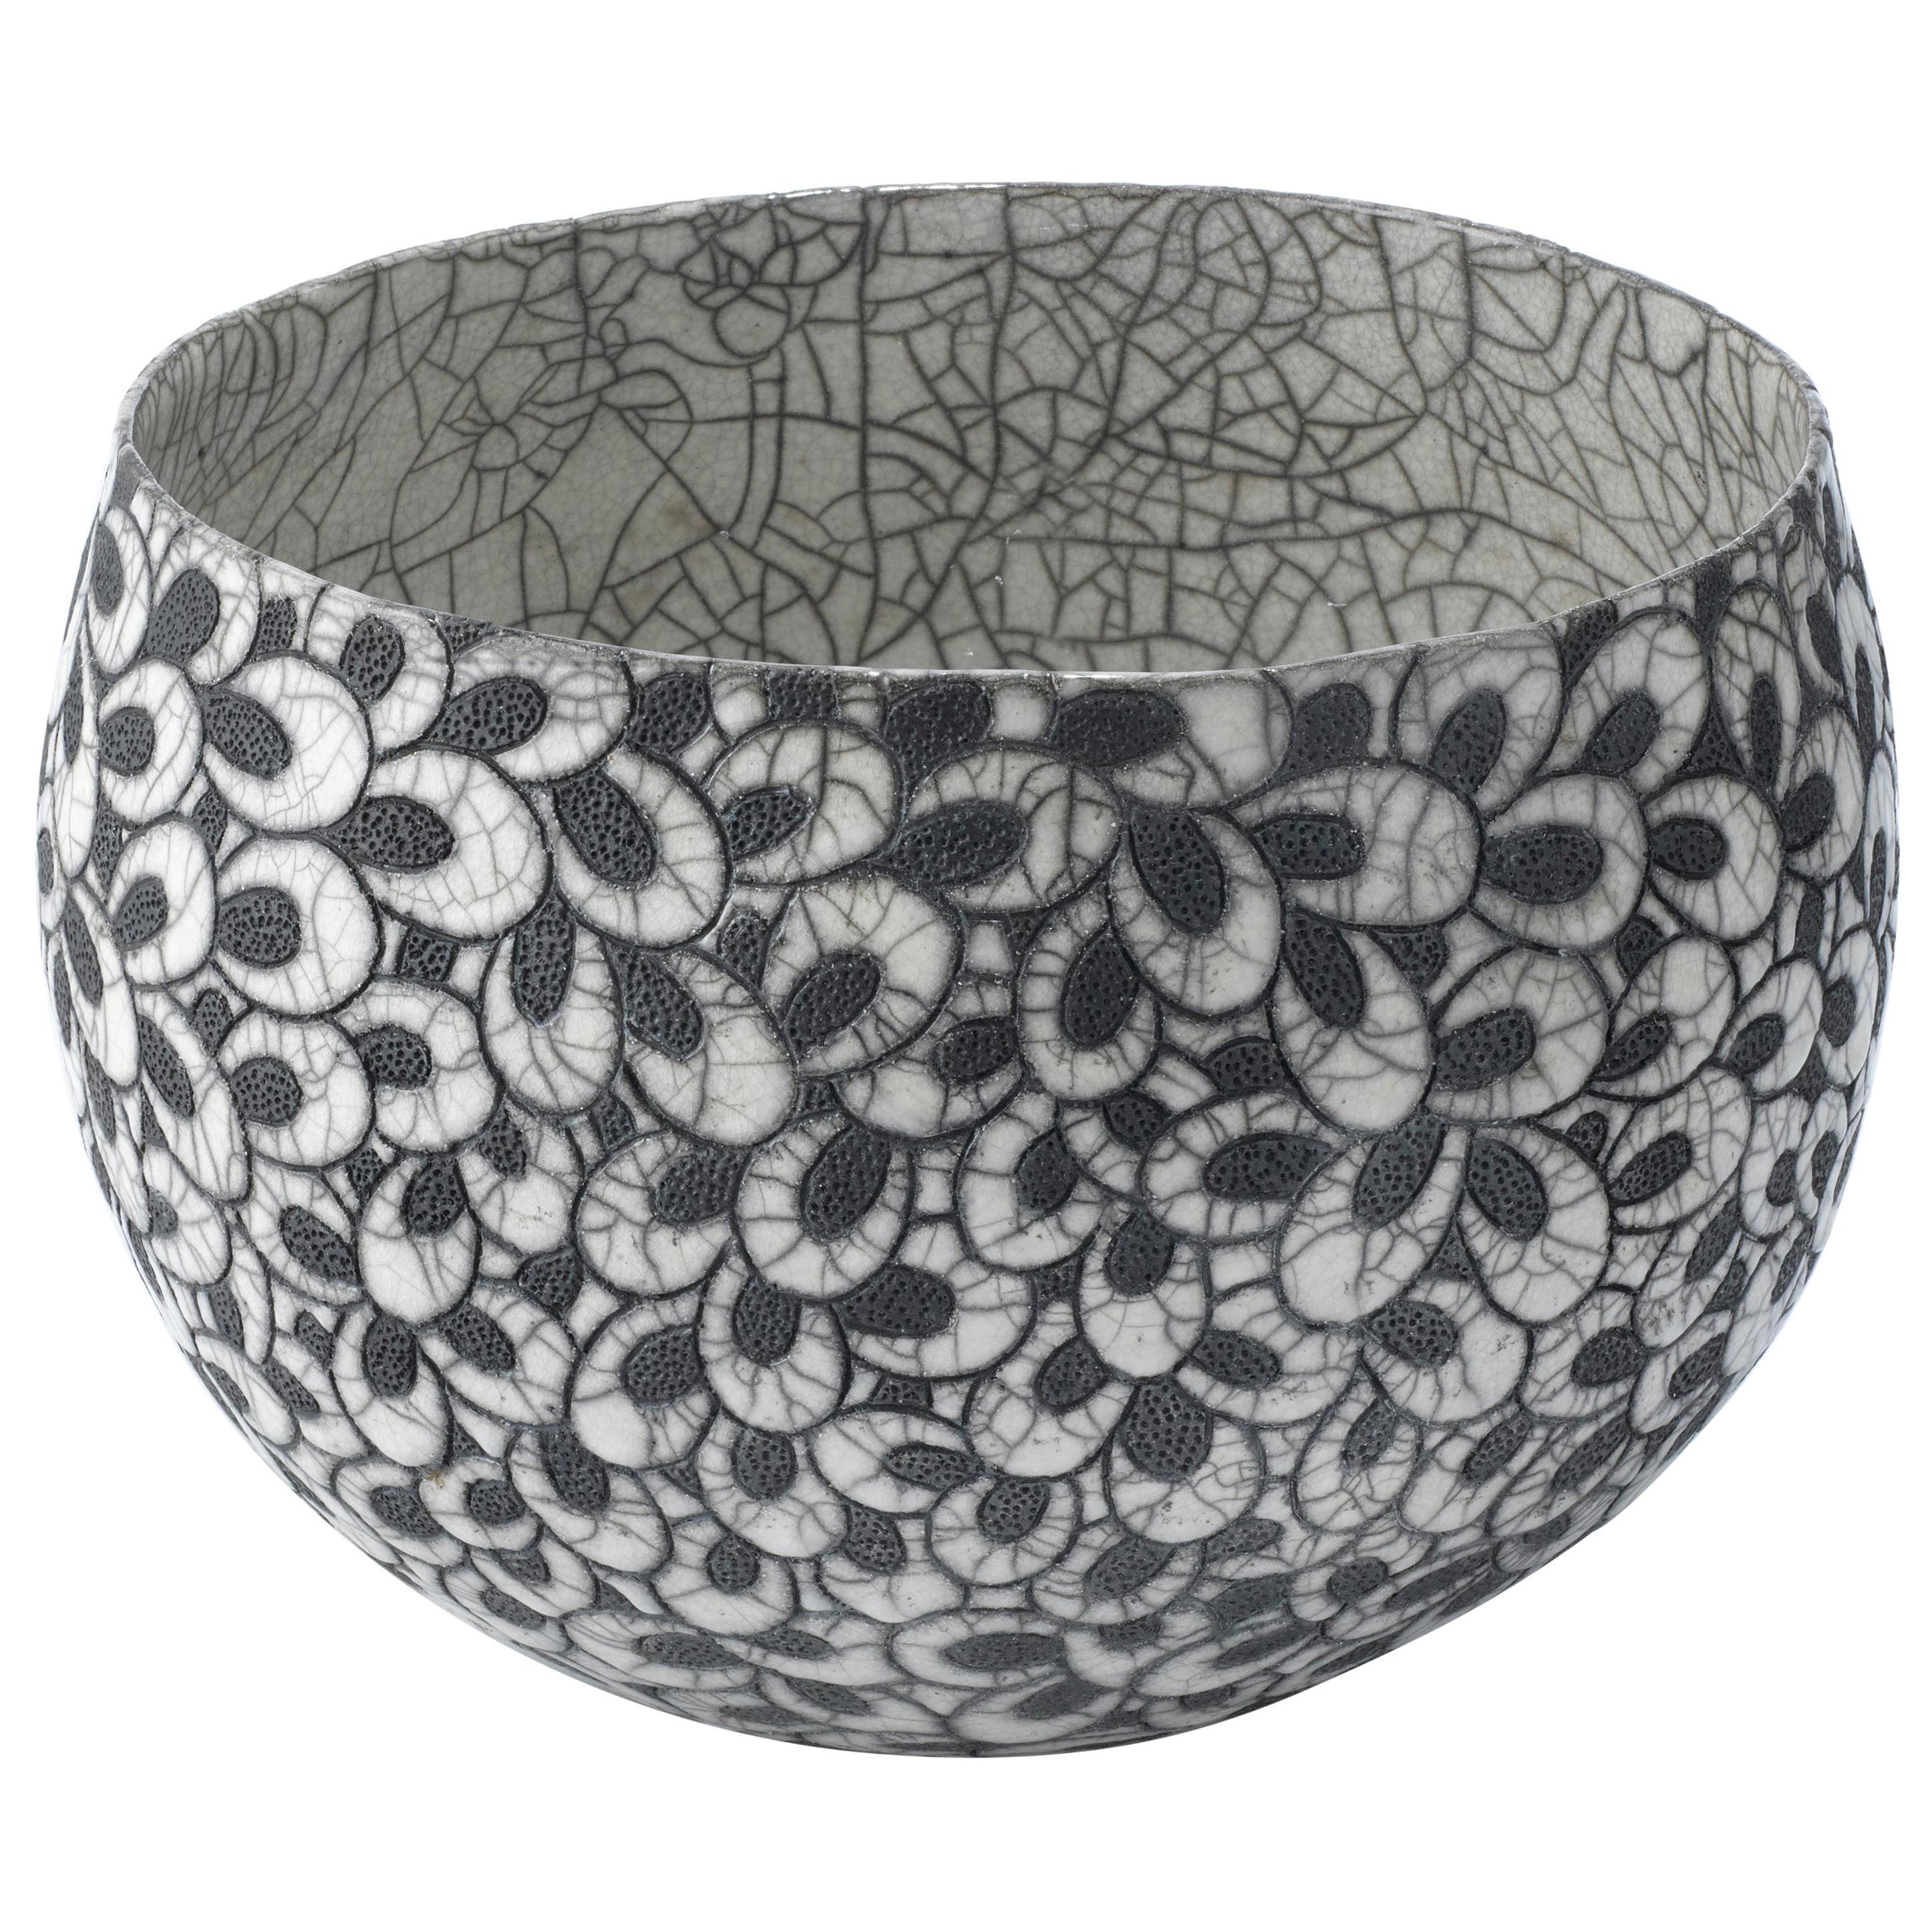 Black and White Ceramic Bowl, Coupe Printemps II